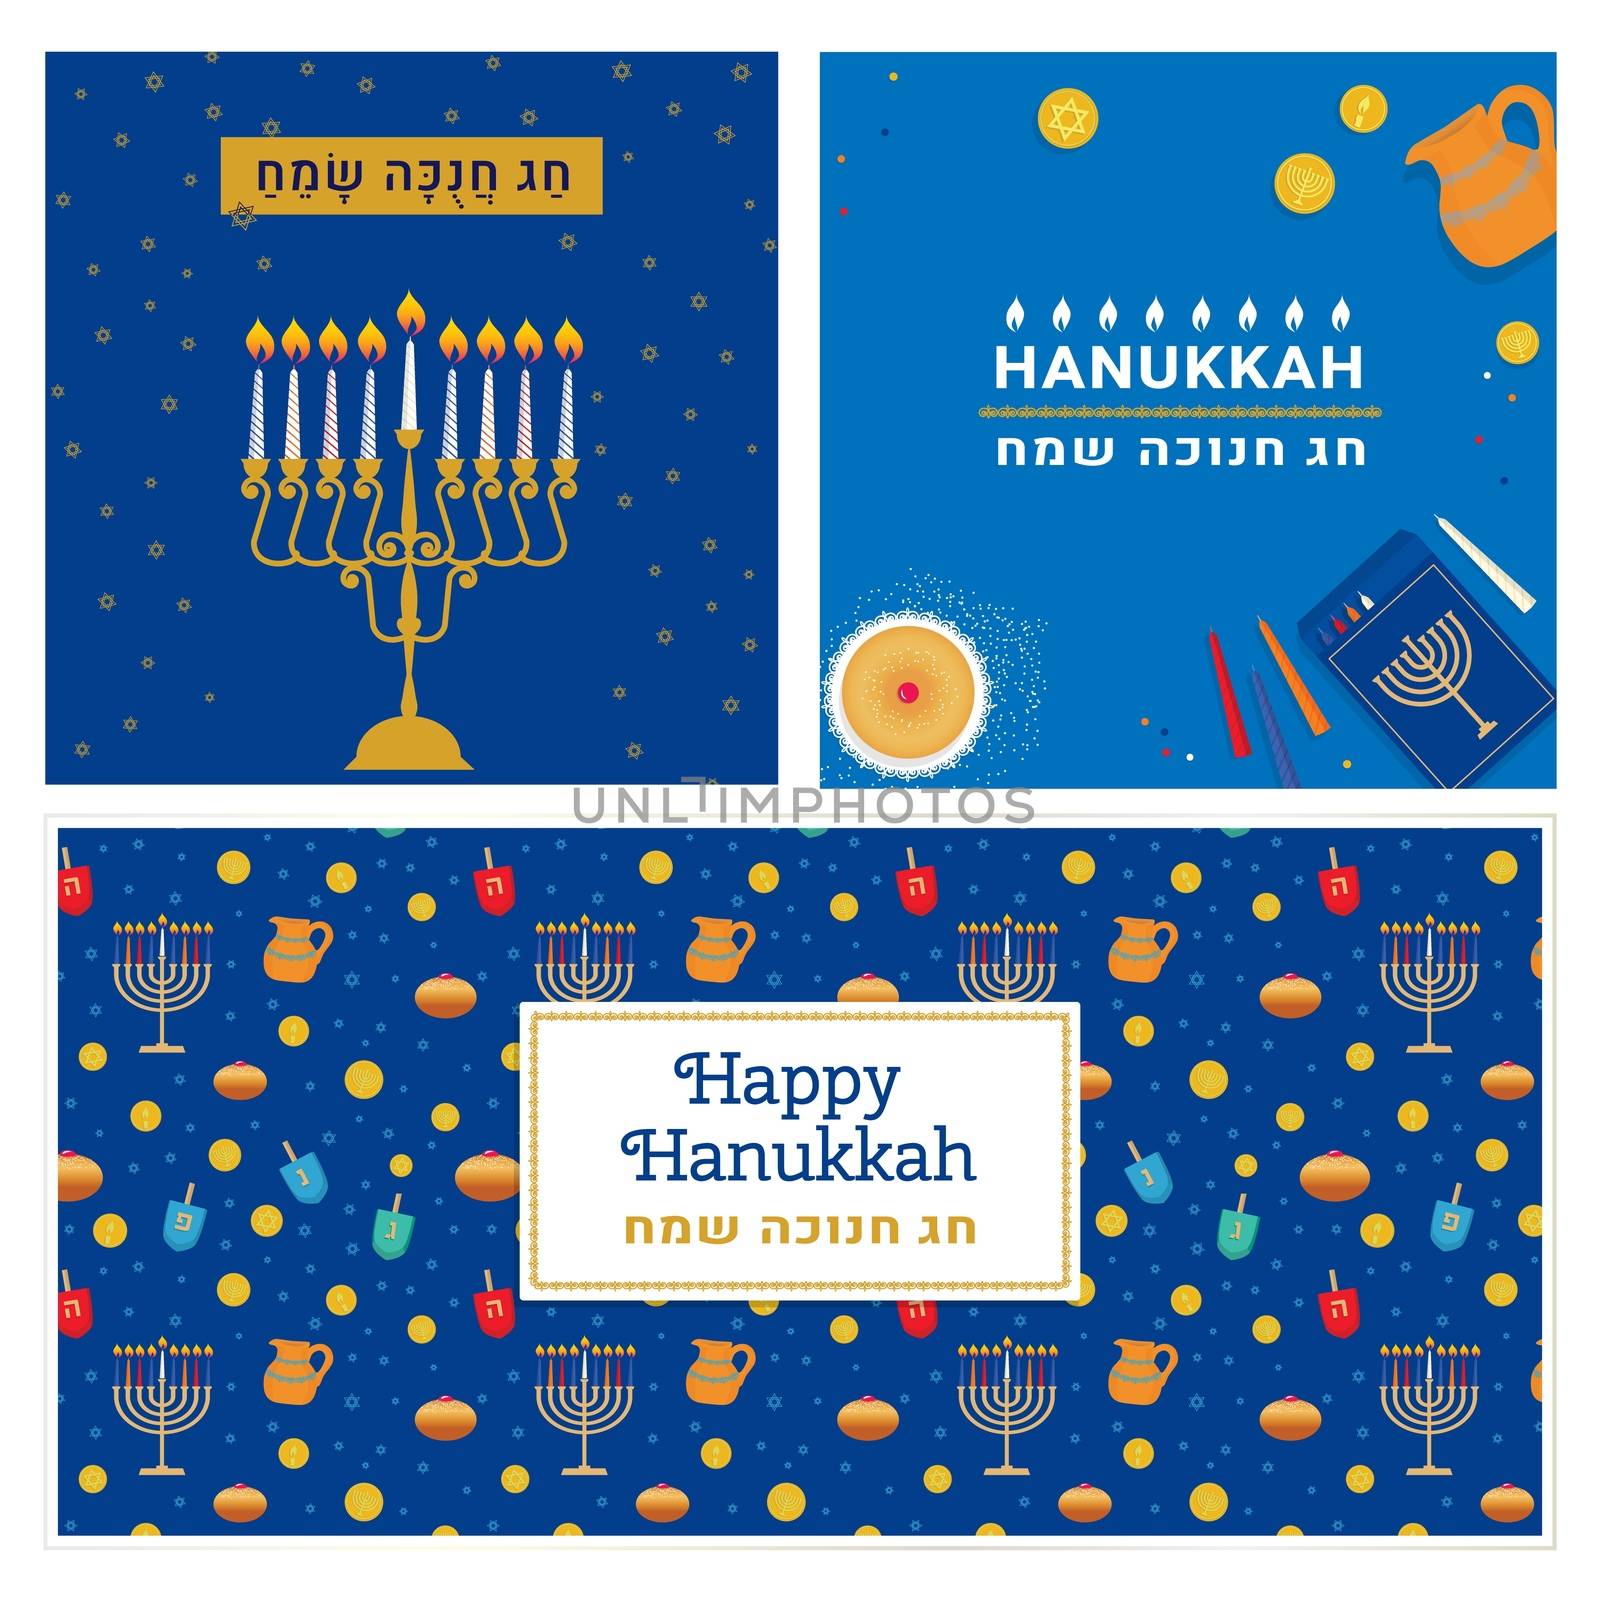 Happy Hanukkah, Jewish Festival of Lights Chanukkah holiday banners, greeting card set with donuts, candles, dreidel, oil jur, menorah, coins, star David pattern. Happy Hanukkah in Hebrew